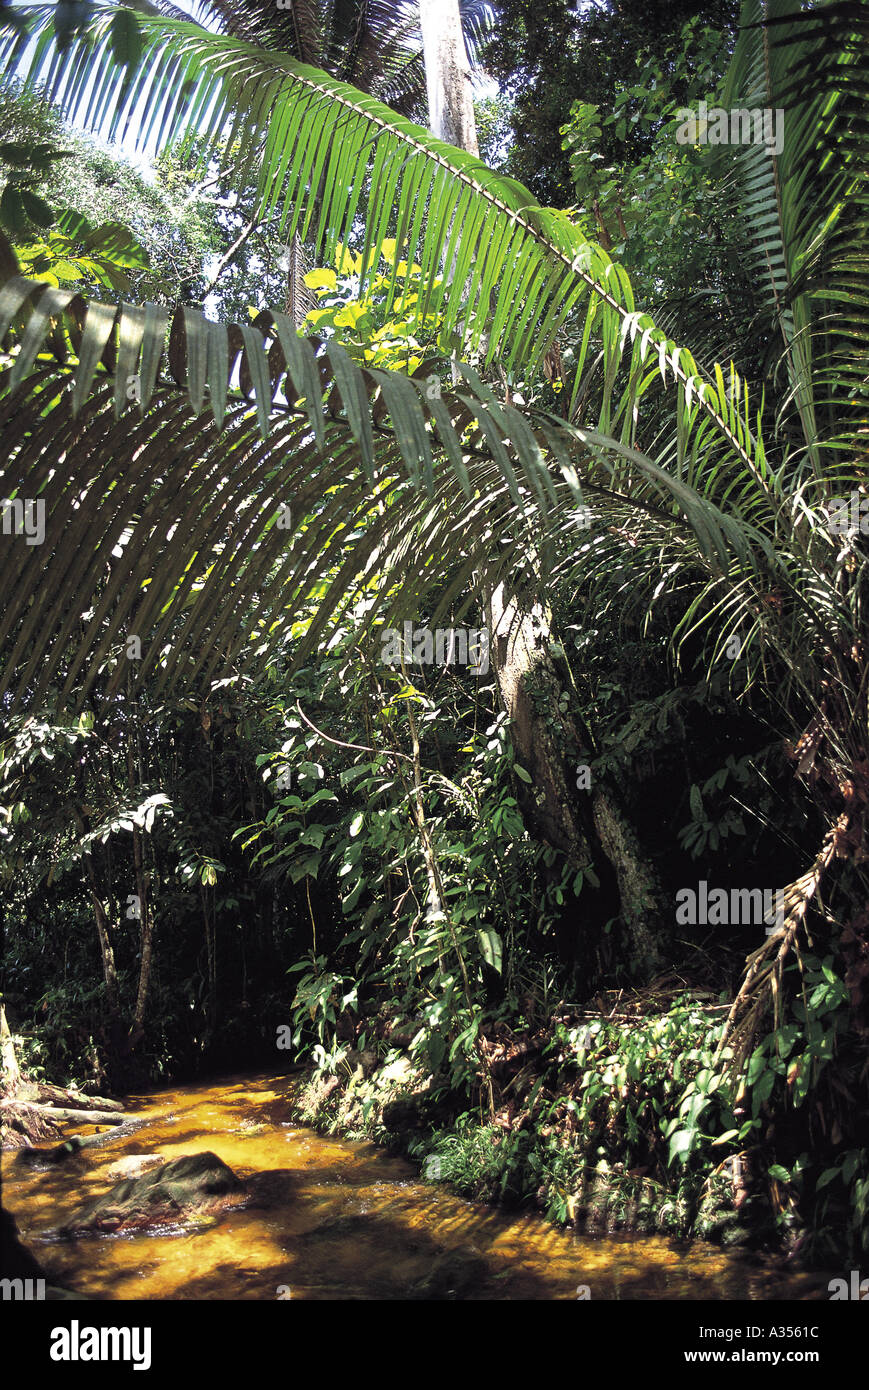 Amazon Basin Brazil Inside the rainforest palm leaves and other vegetation Stock Photo